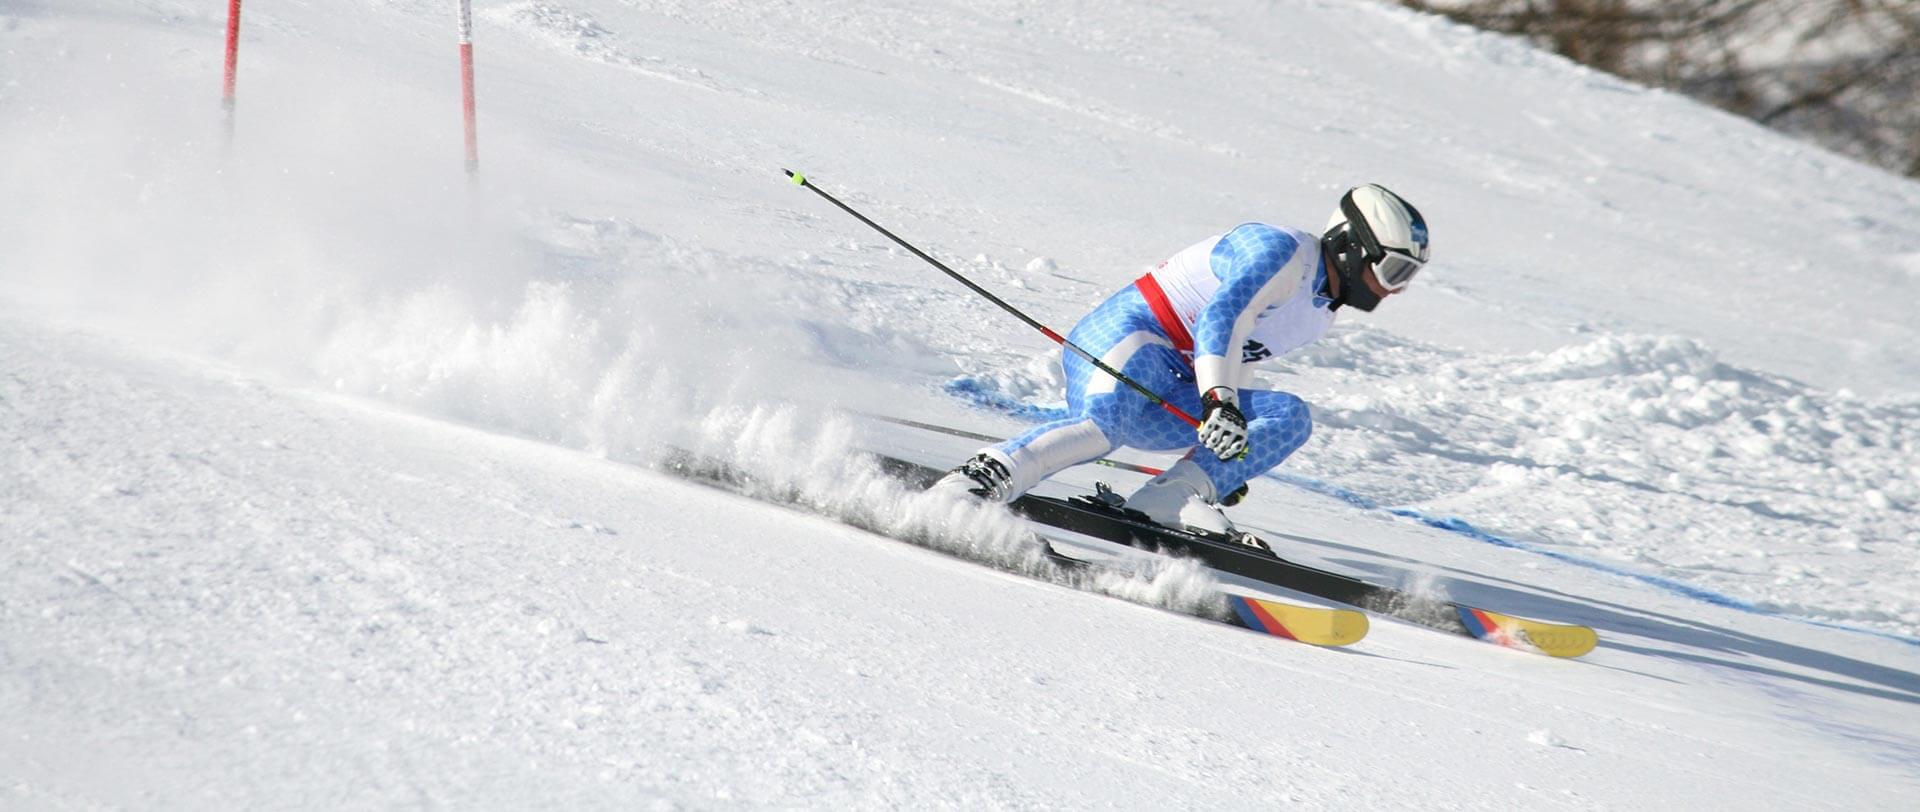 An alpine skier sends snow flying as he plummets down a snowy course.